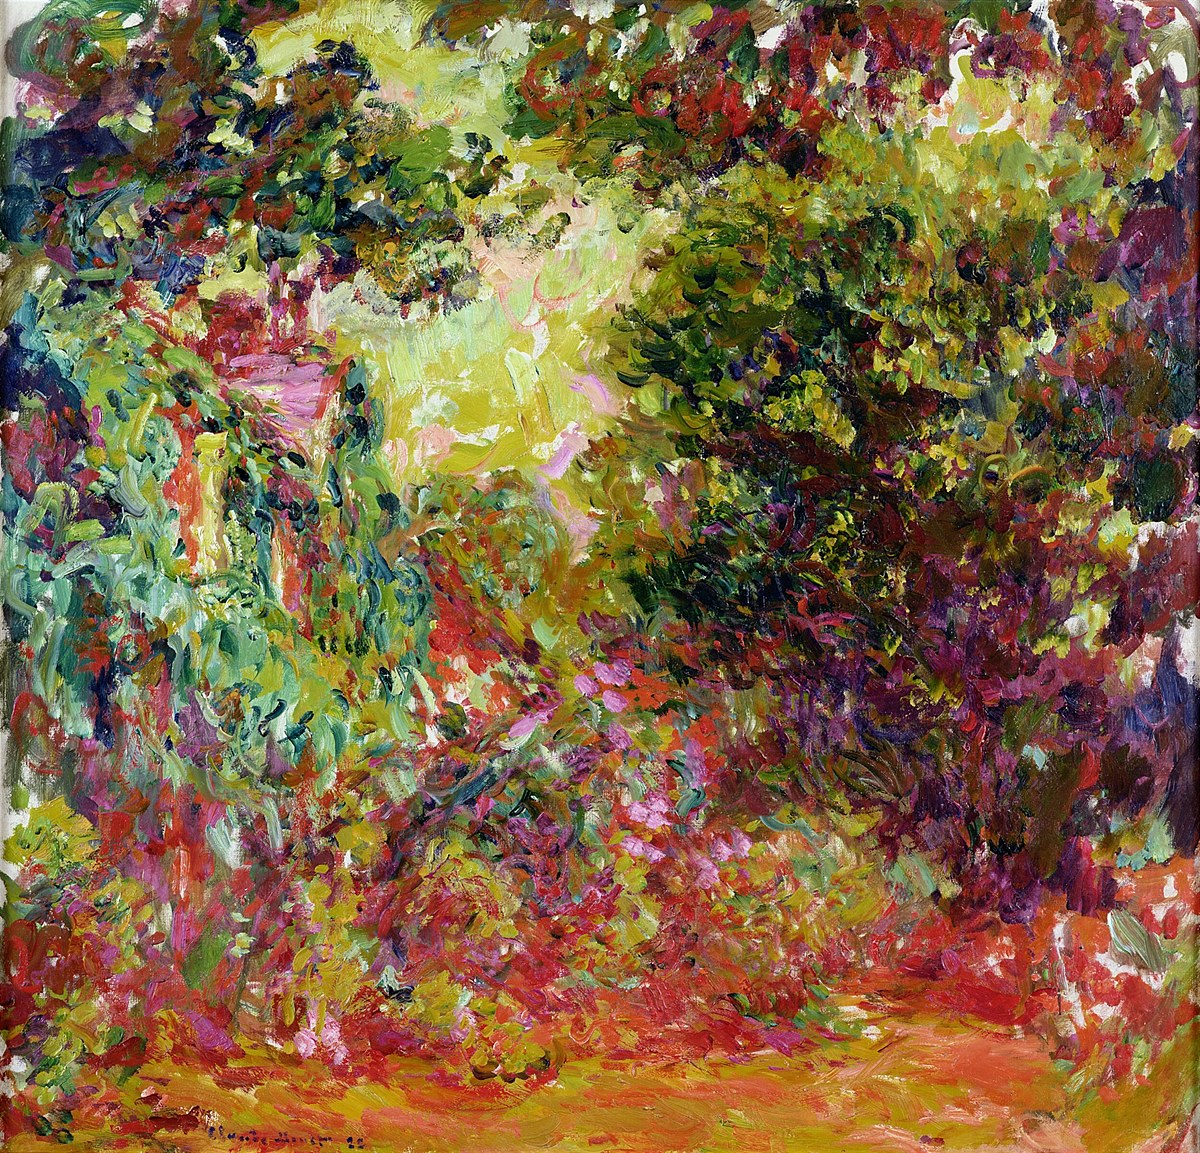 Fondation Louis Vuitton_Exhibition Monet - Mitchell, Dialogue and Retrospective_Claude Monet, The Artist’s House Seen from the Rose Garden, 1922-1924